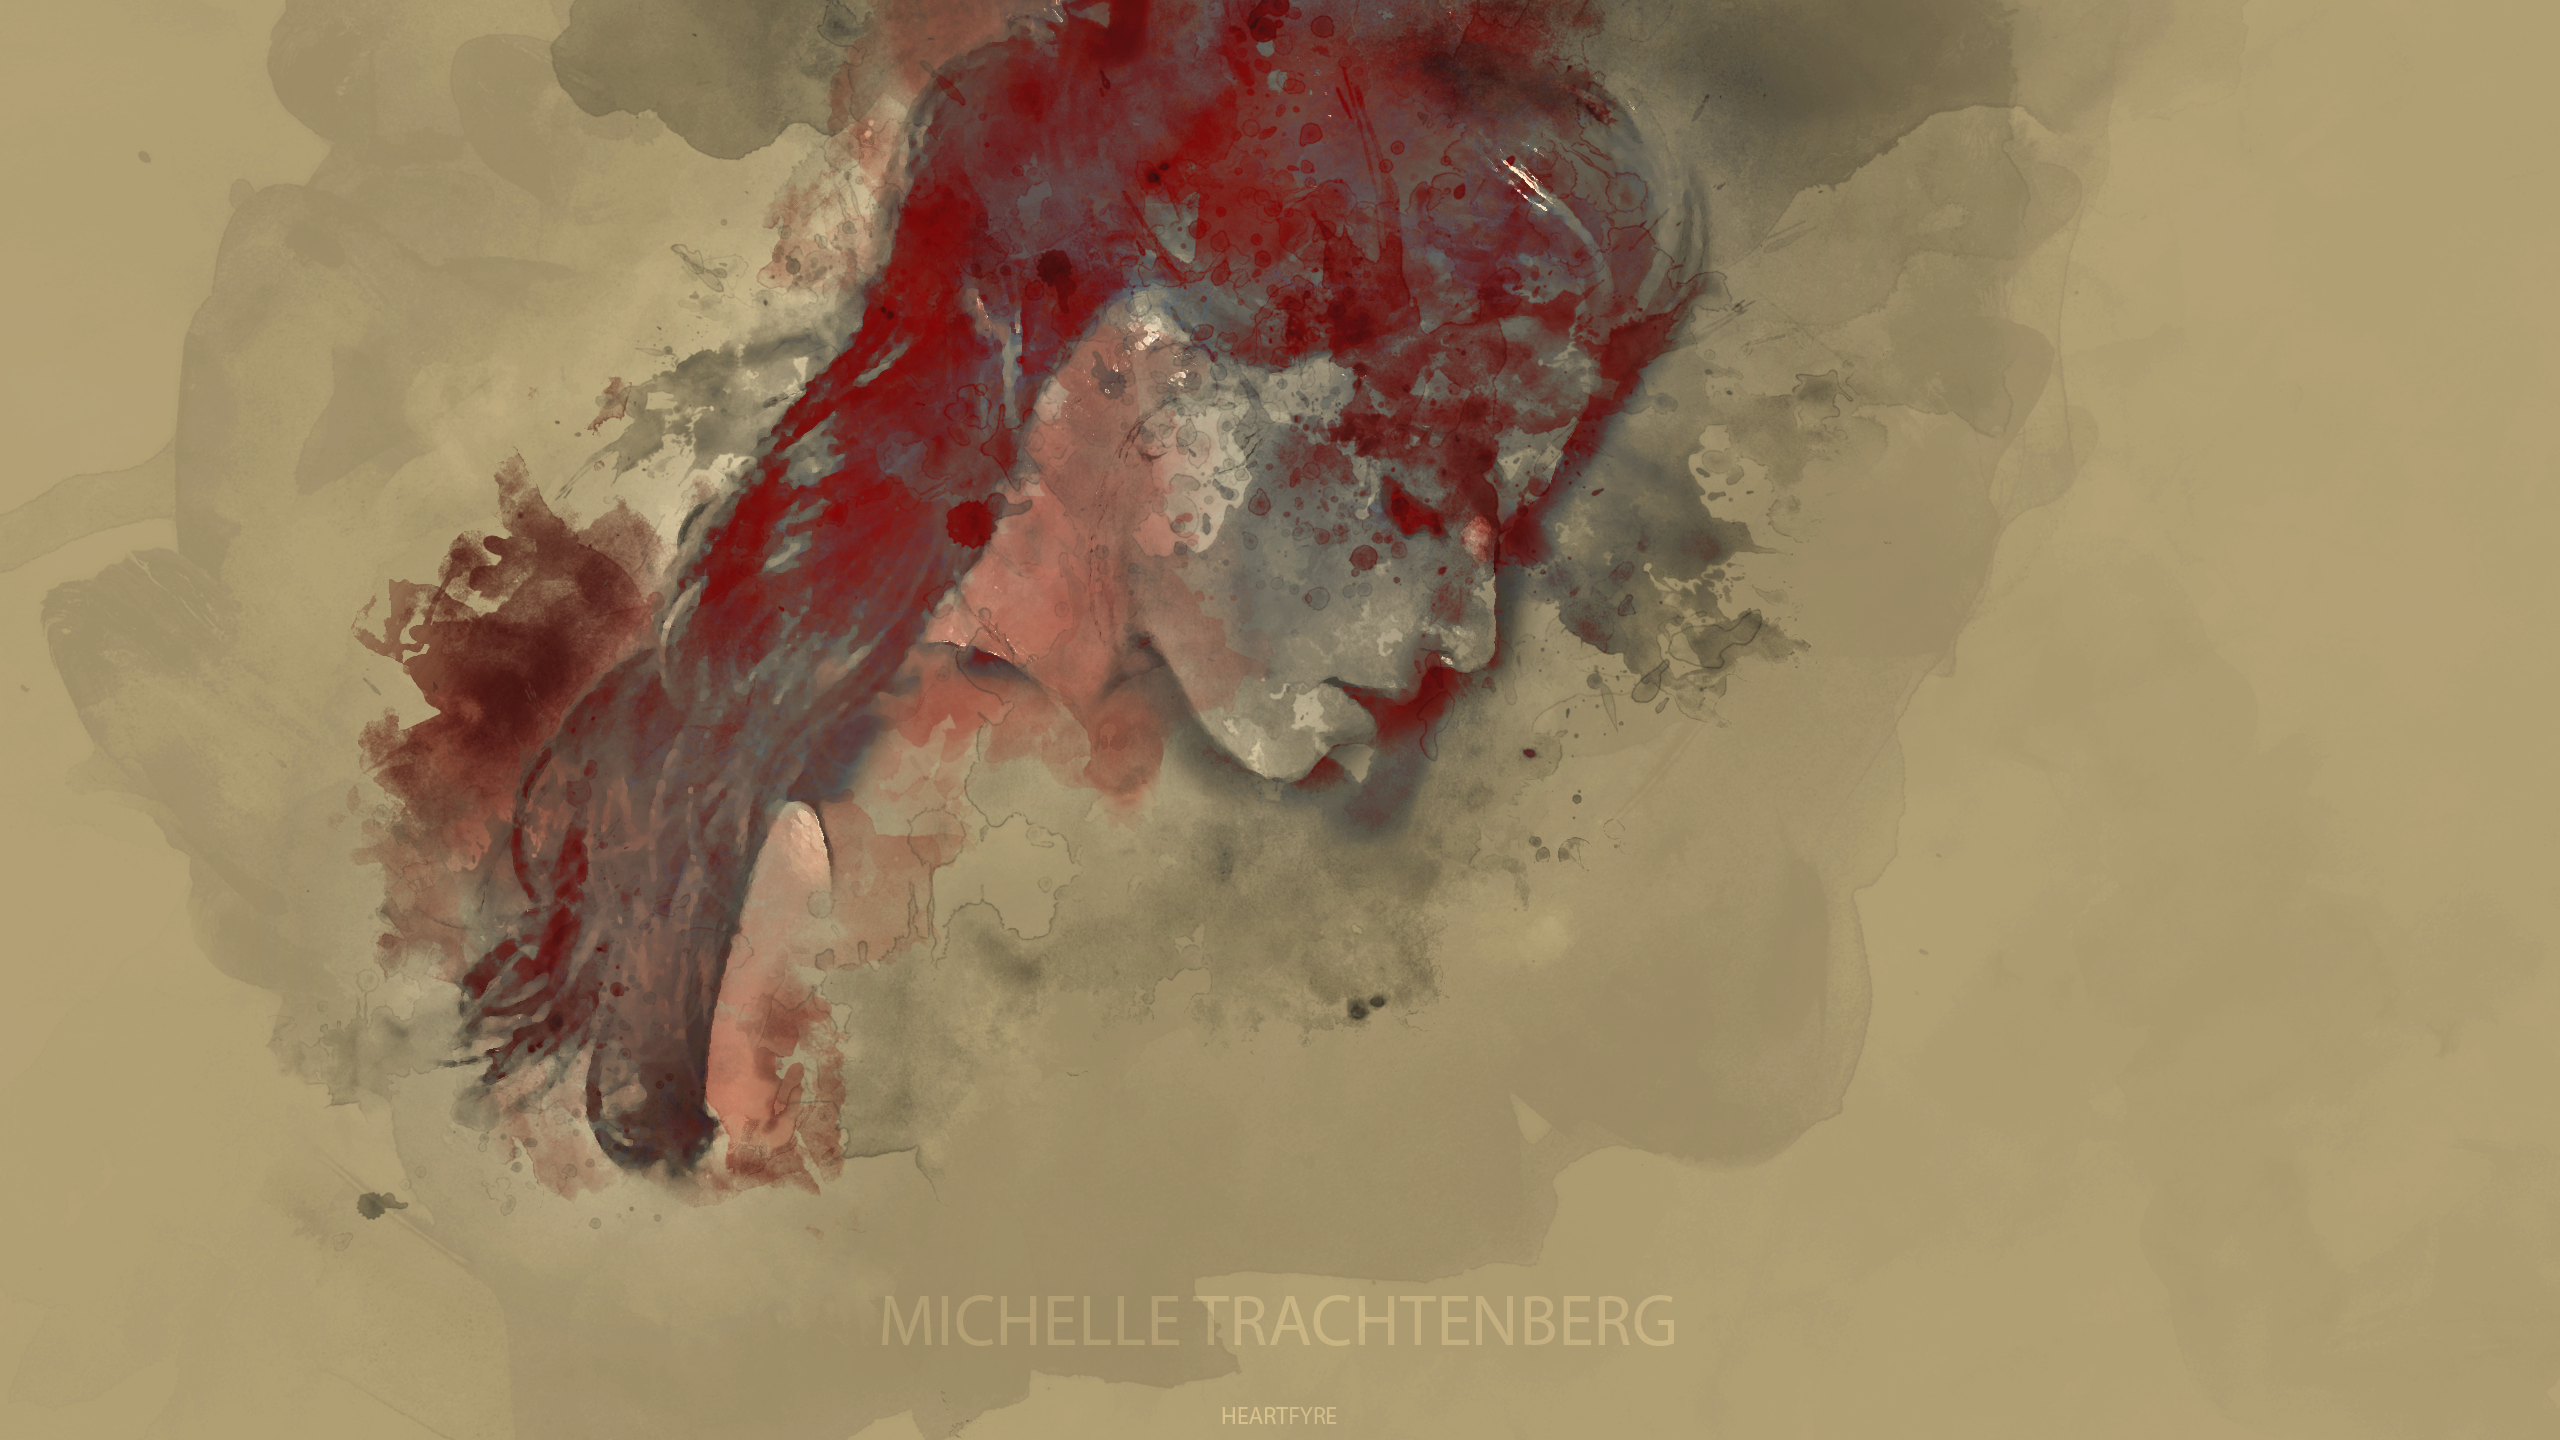 General 2560x1440 portrait watercolor red blue Michelle Trachtenberg digital art watermarked text